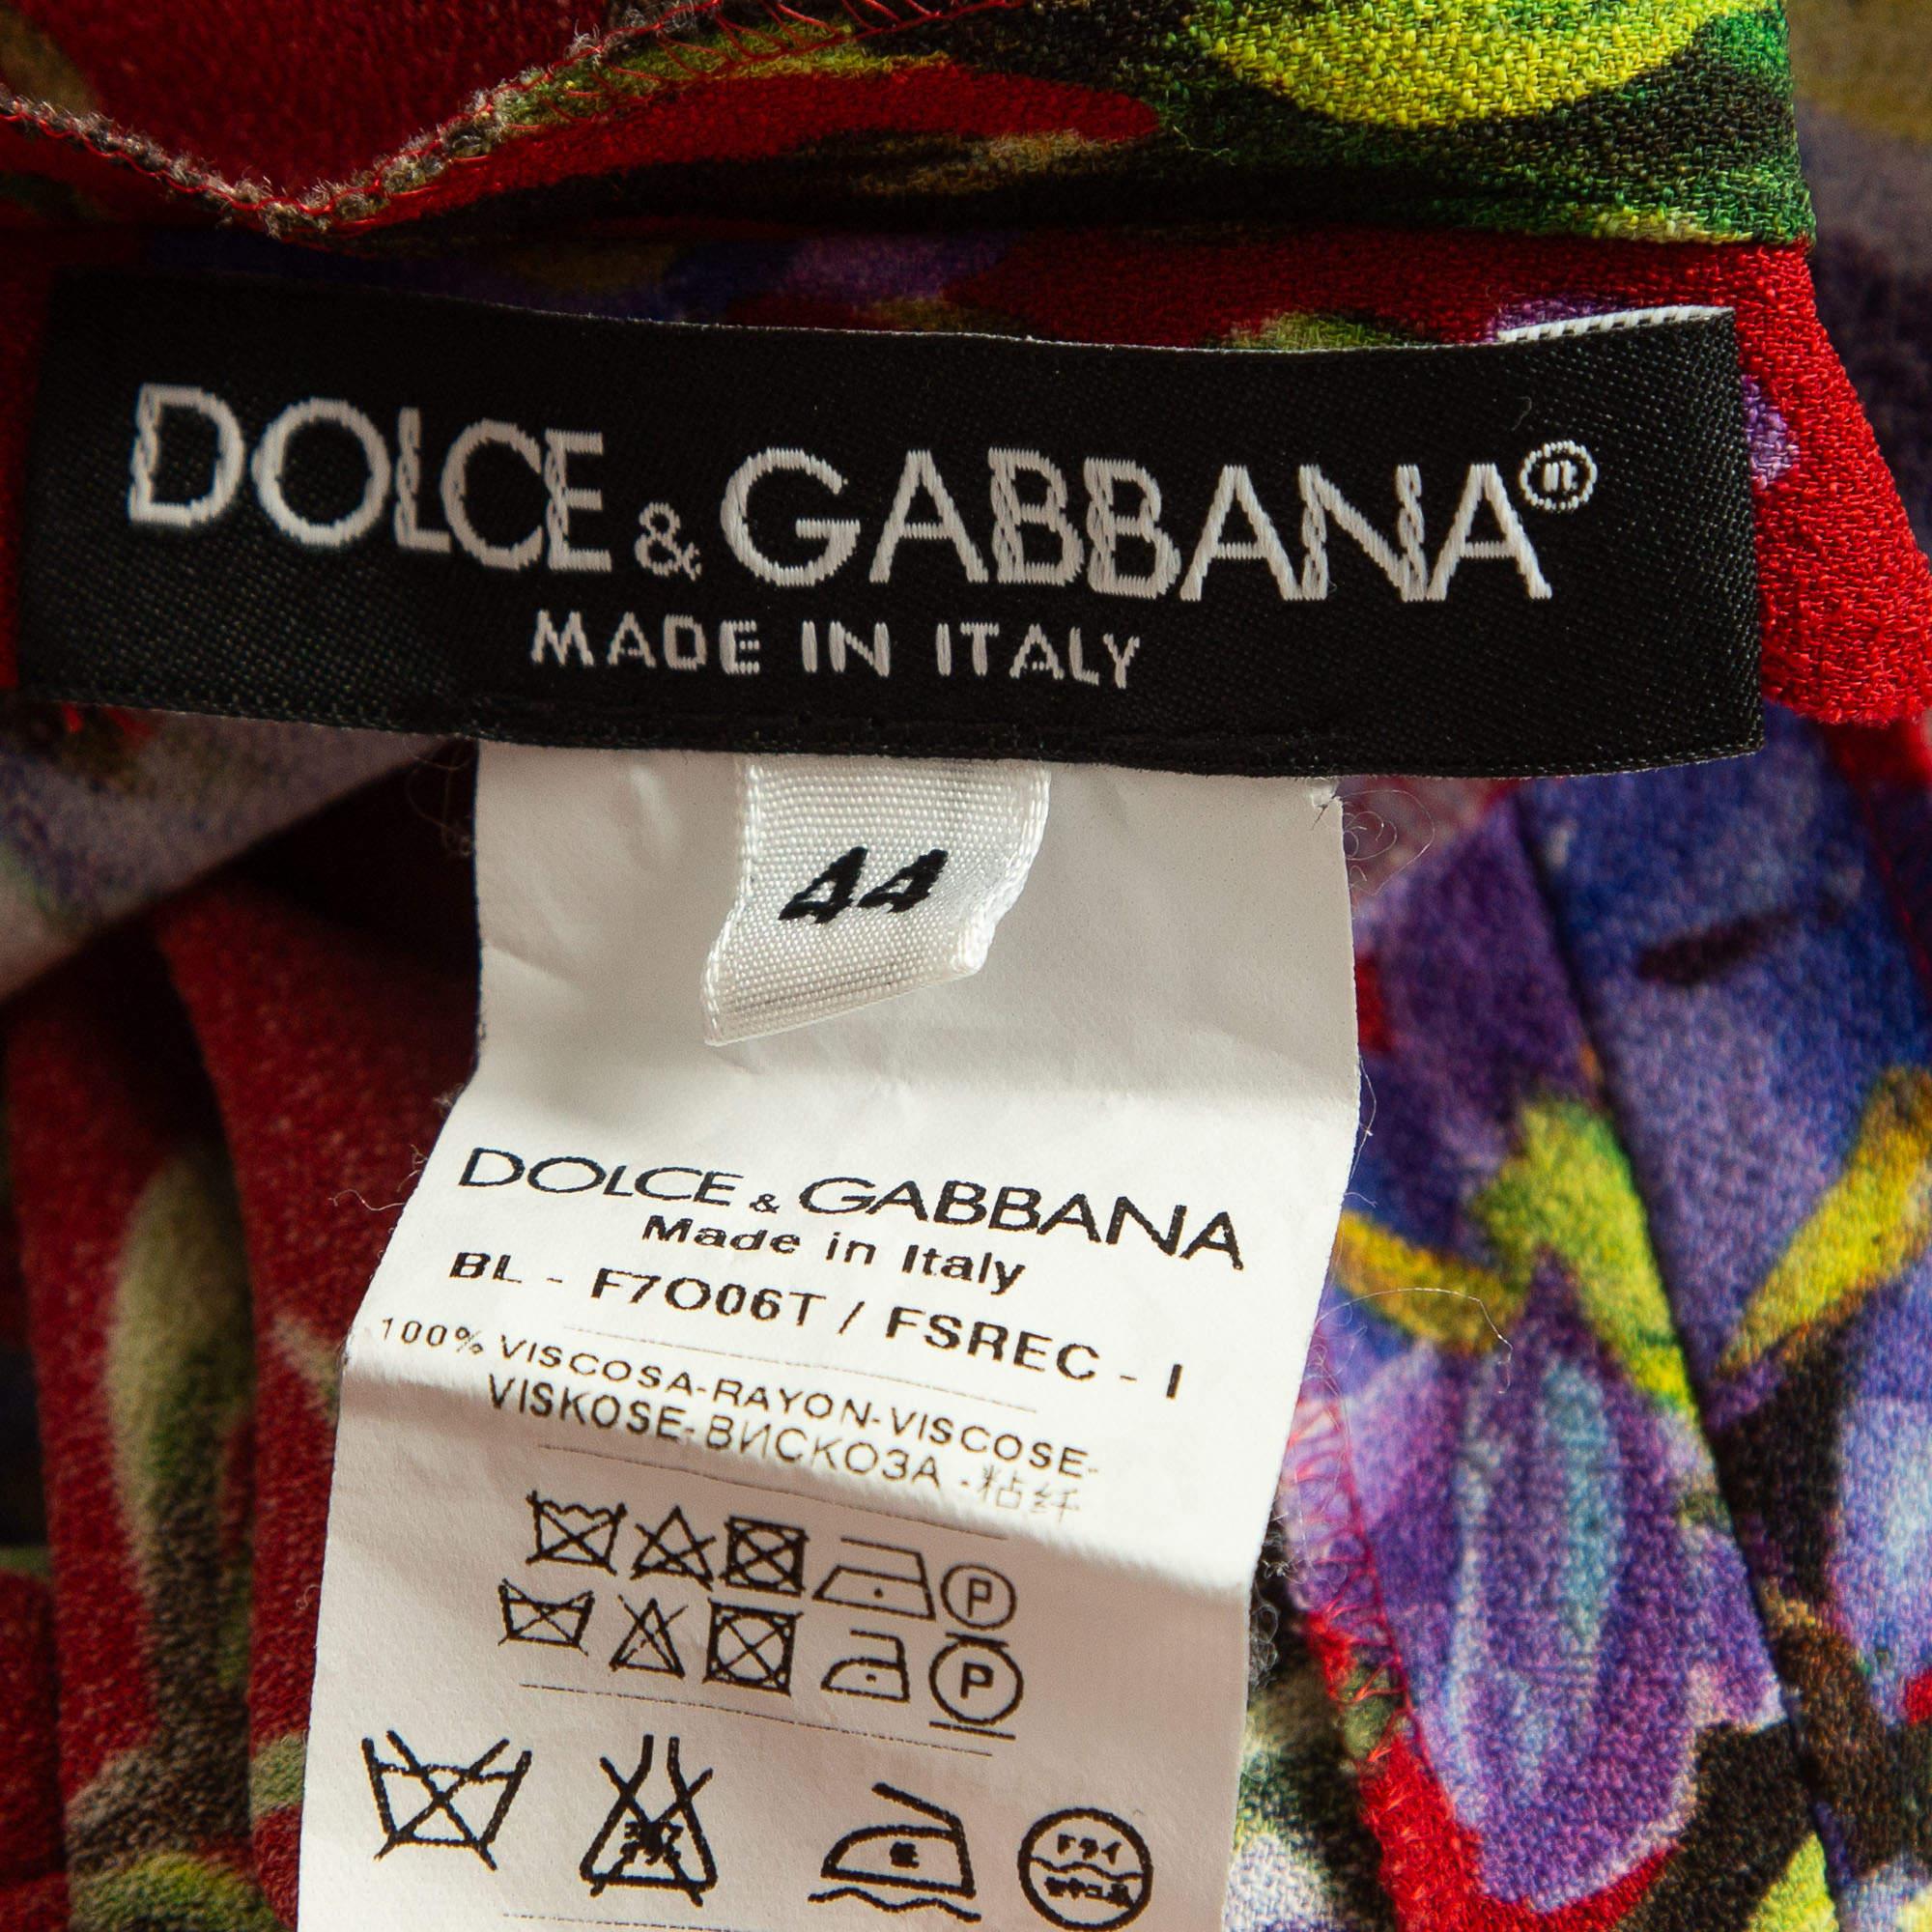 Dolce & Gabbana Red Floral Print Crepe Blouse M In Excellent Condition For Sale In Dubai, Al Qouz 2